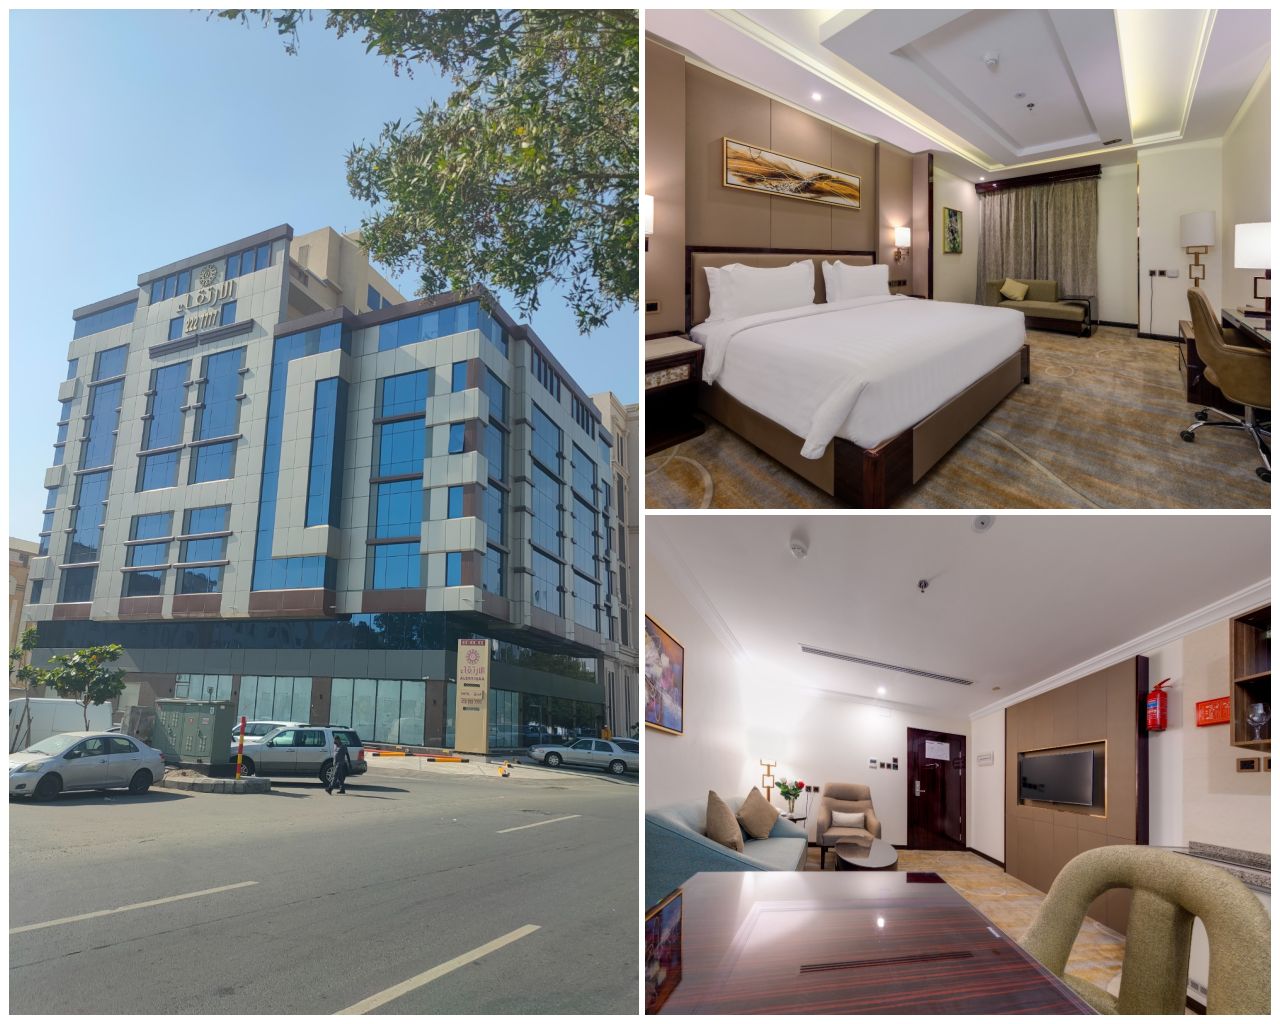 Continent Worldwide Hotels, Sudi Arabistan’da 3. Otelini açıyor